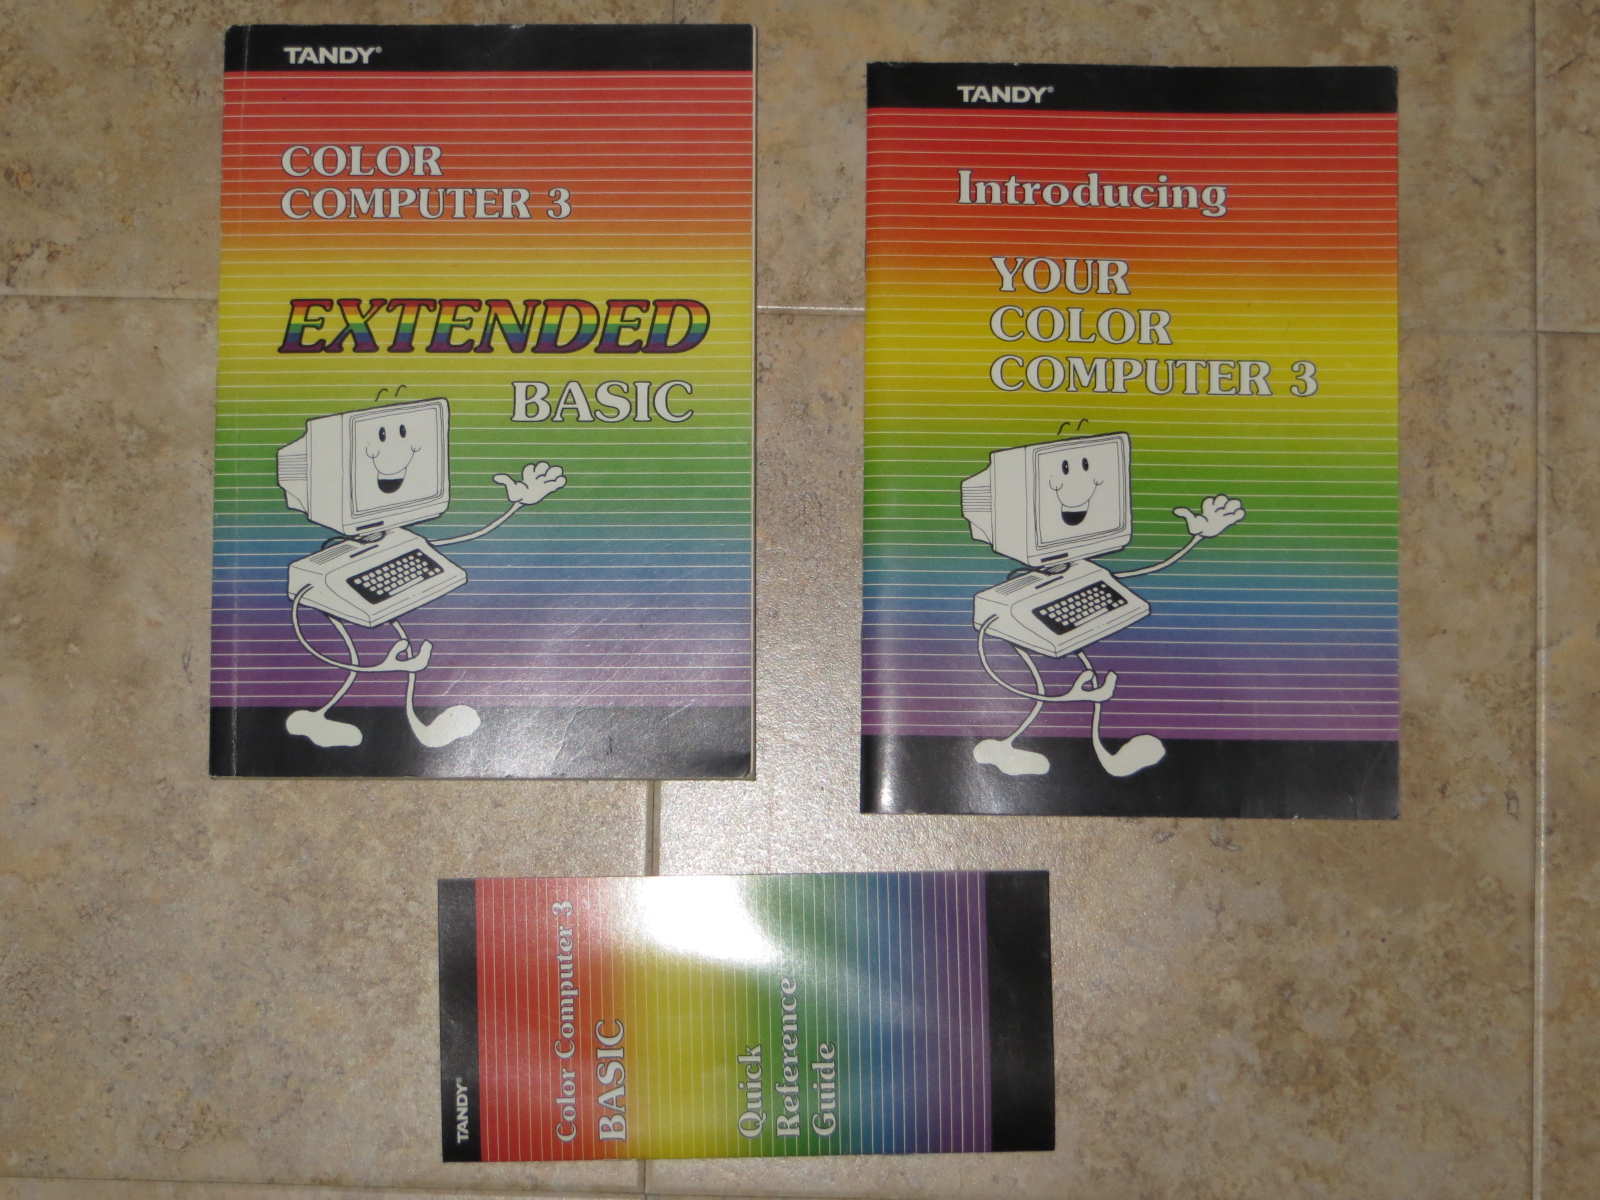 Color Computer 3 Documentation